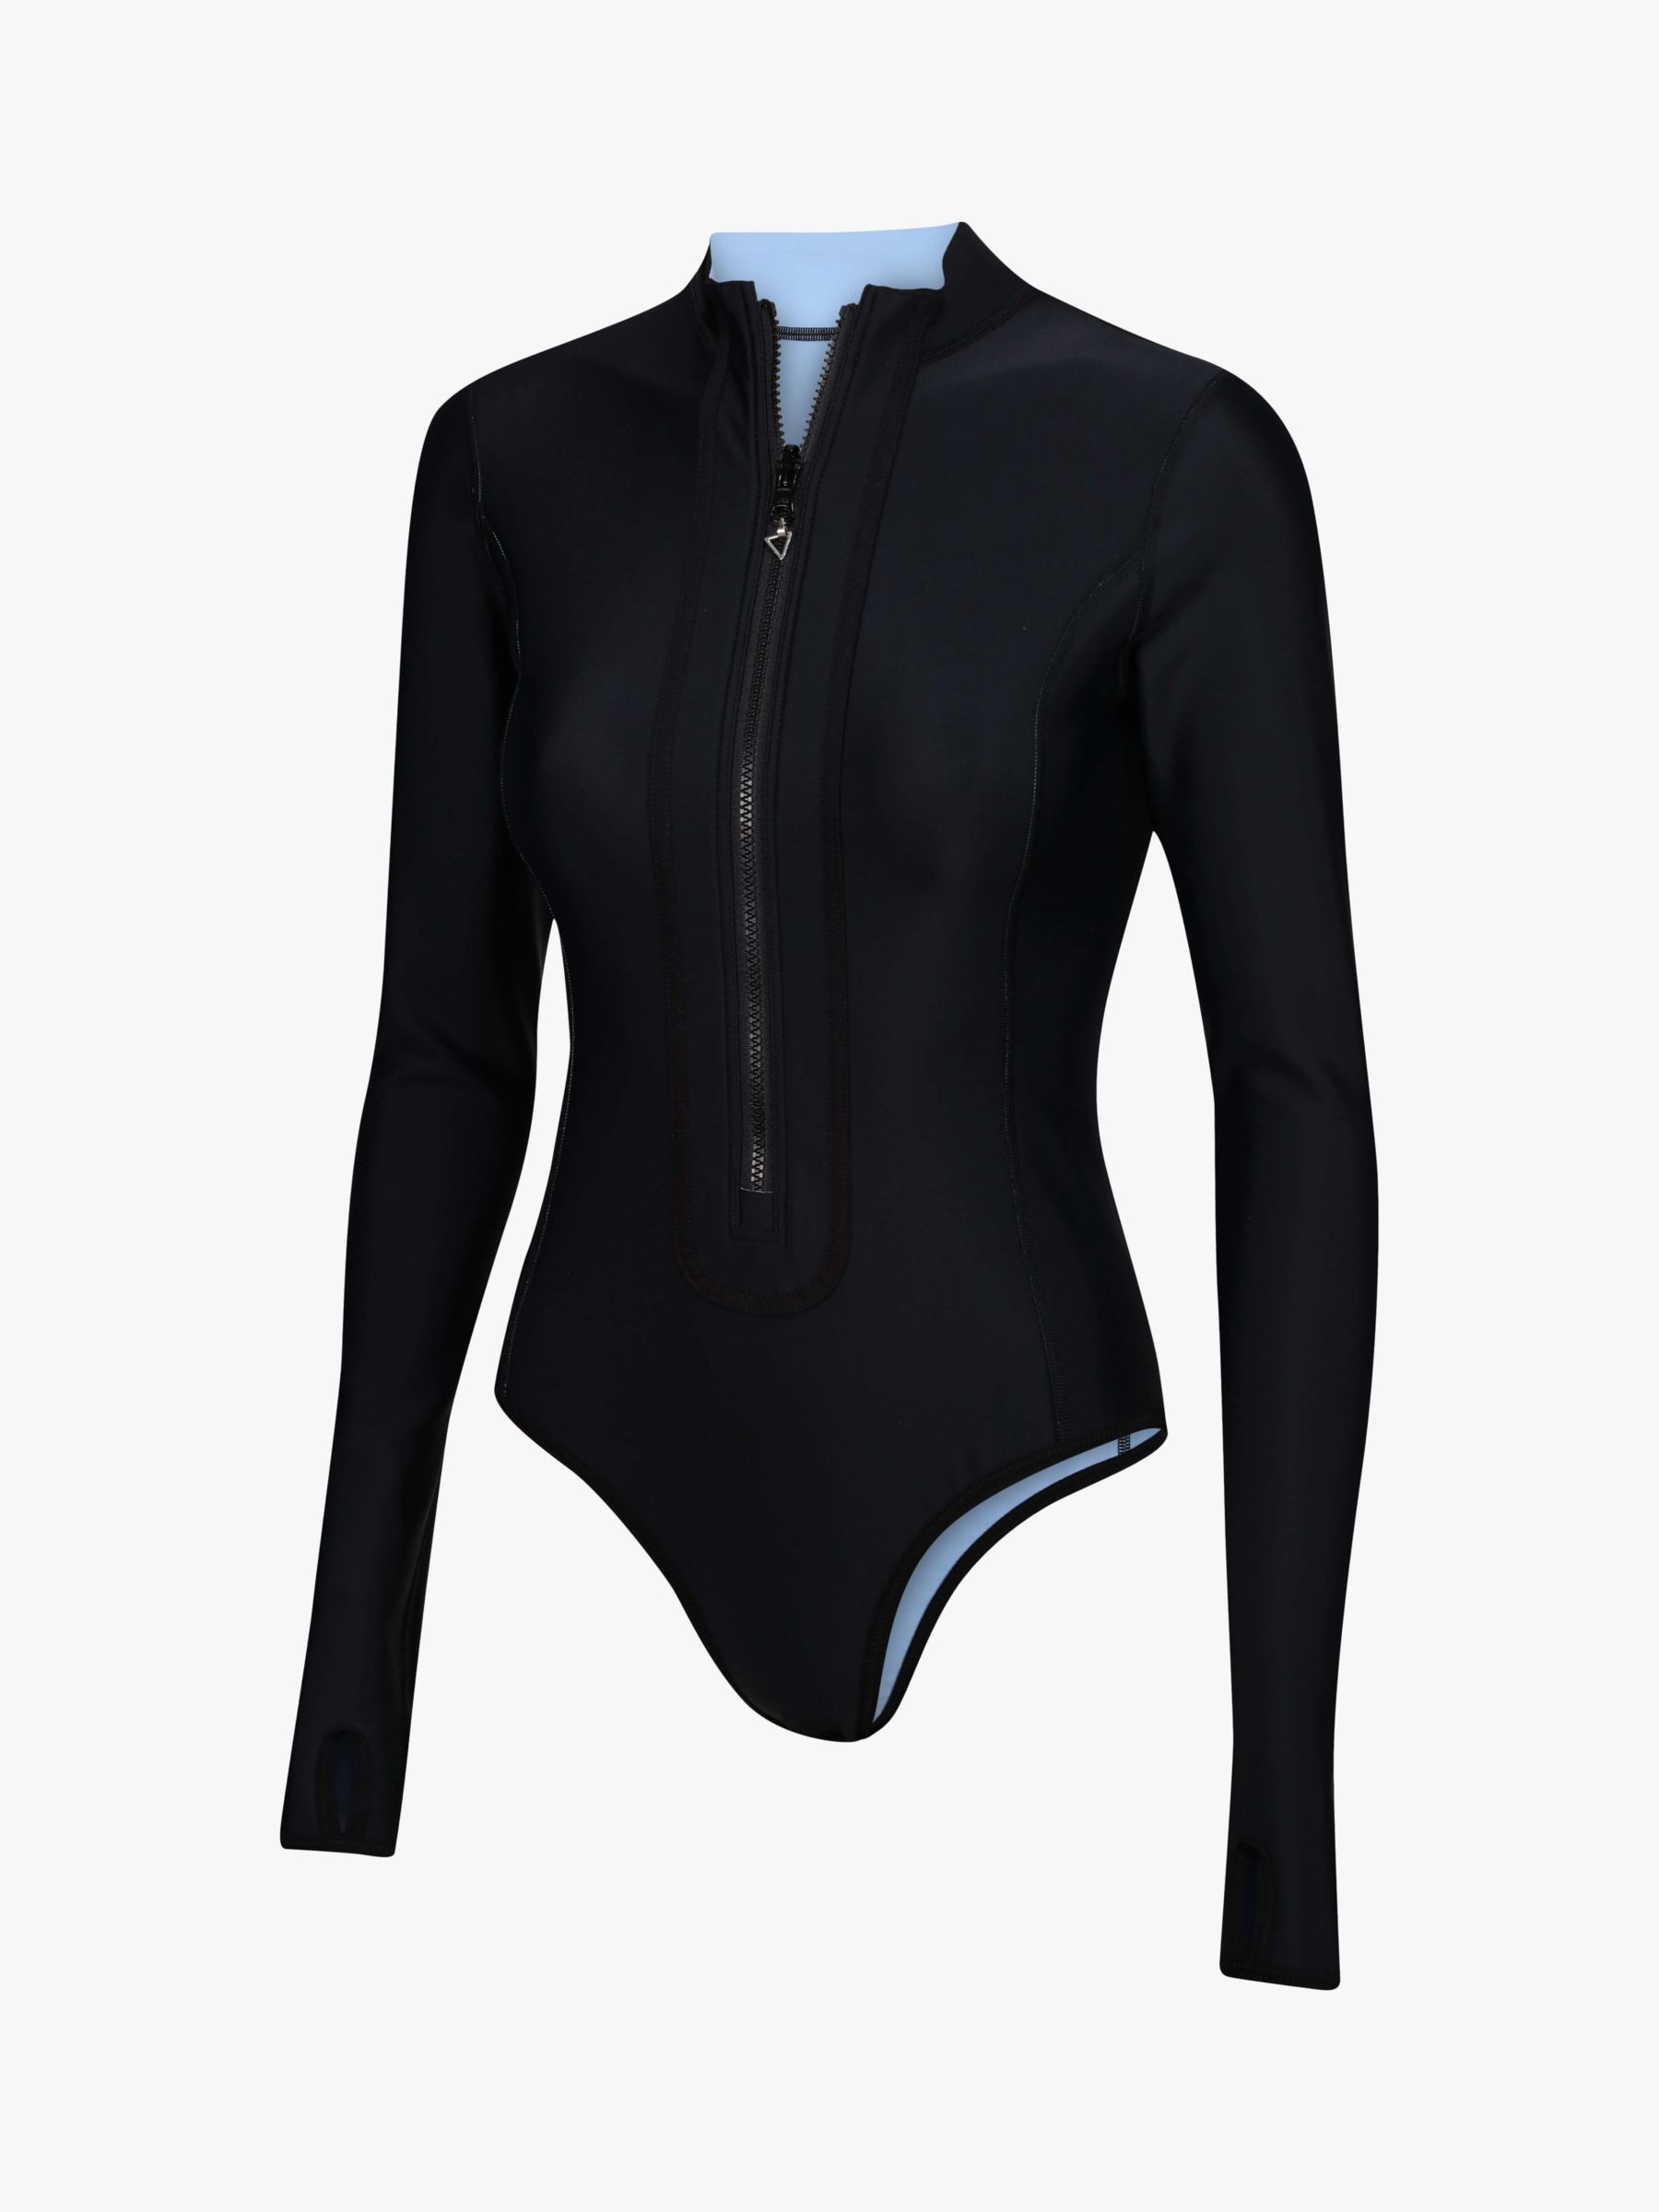 Davy J Bonded Long Sleeve Swimsuit, Powder Blue/Black, XS